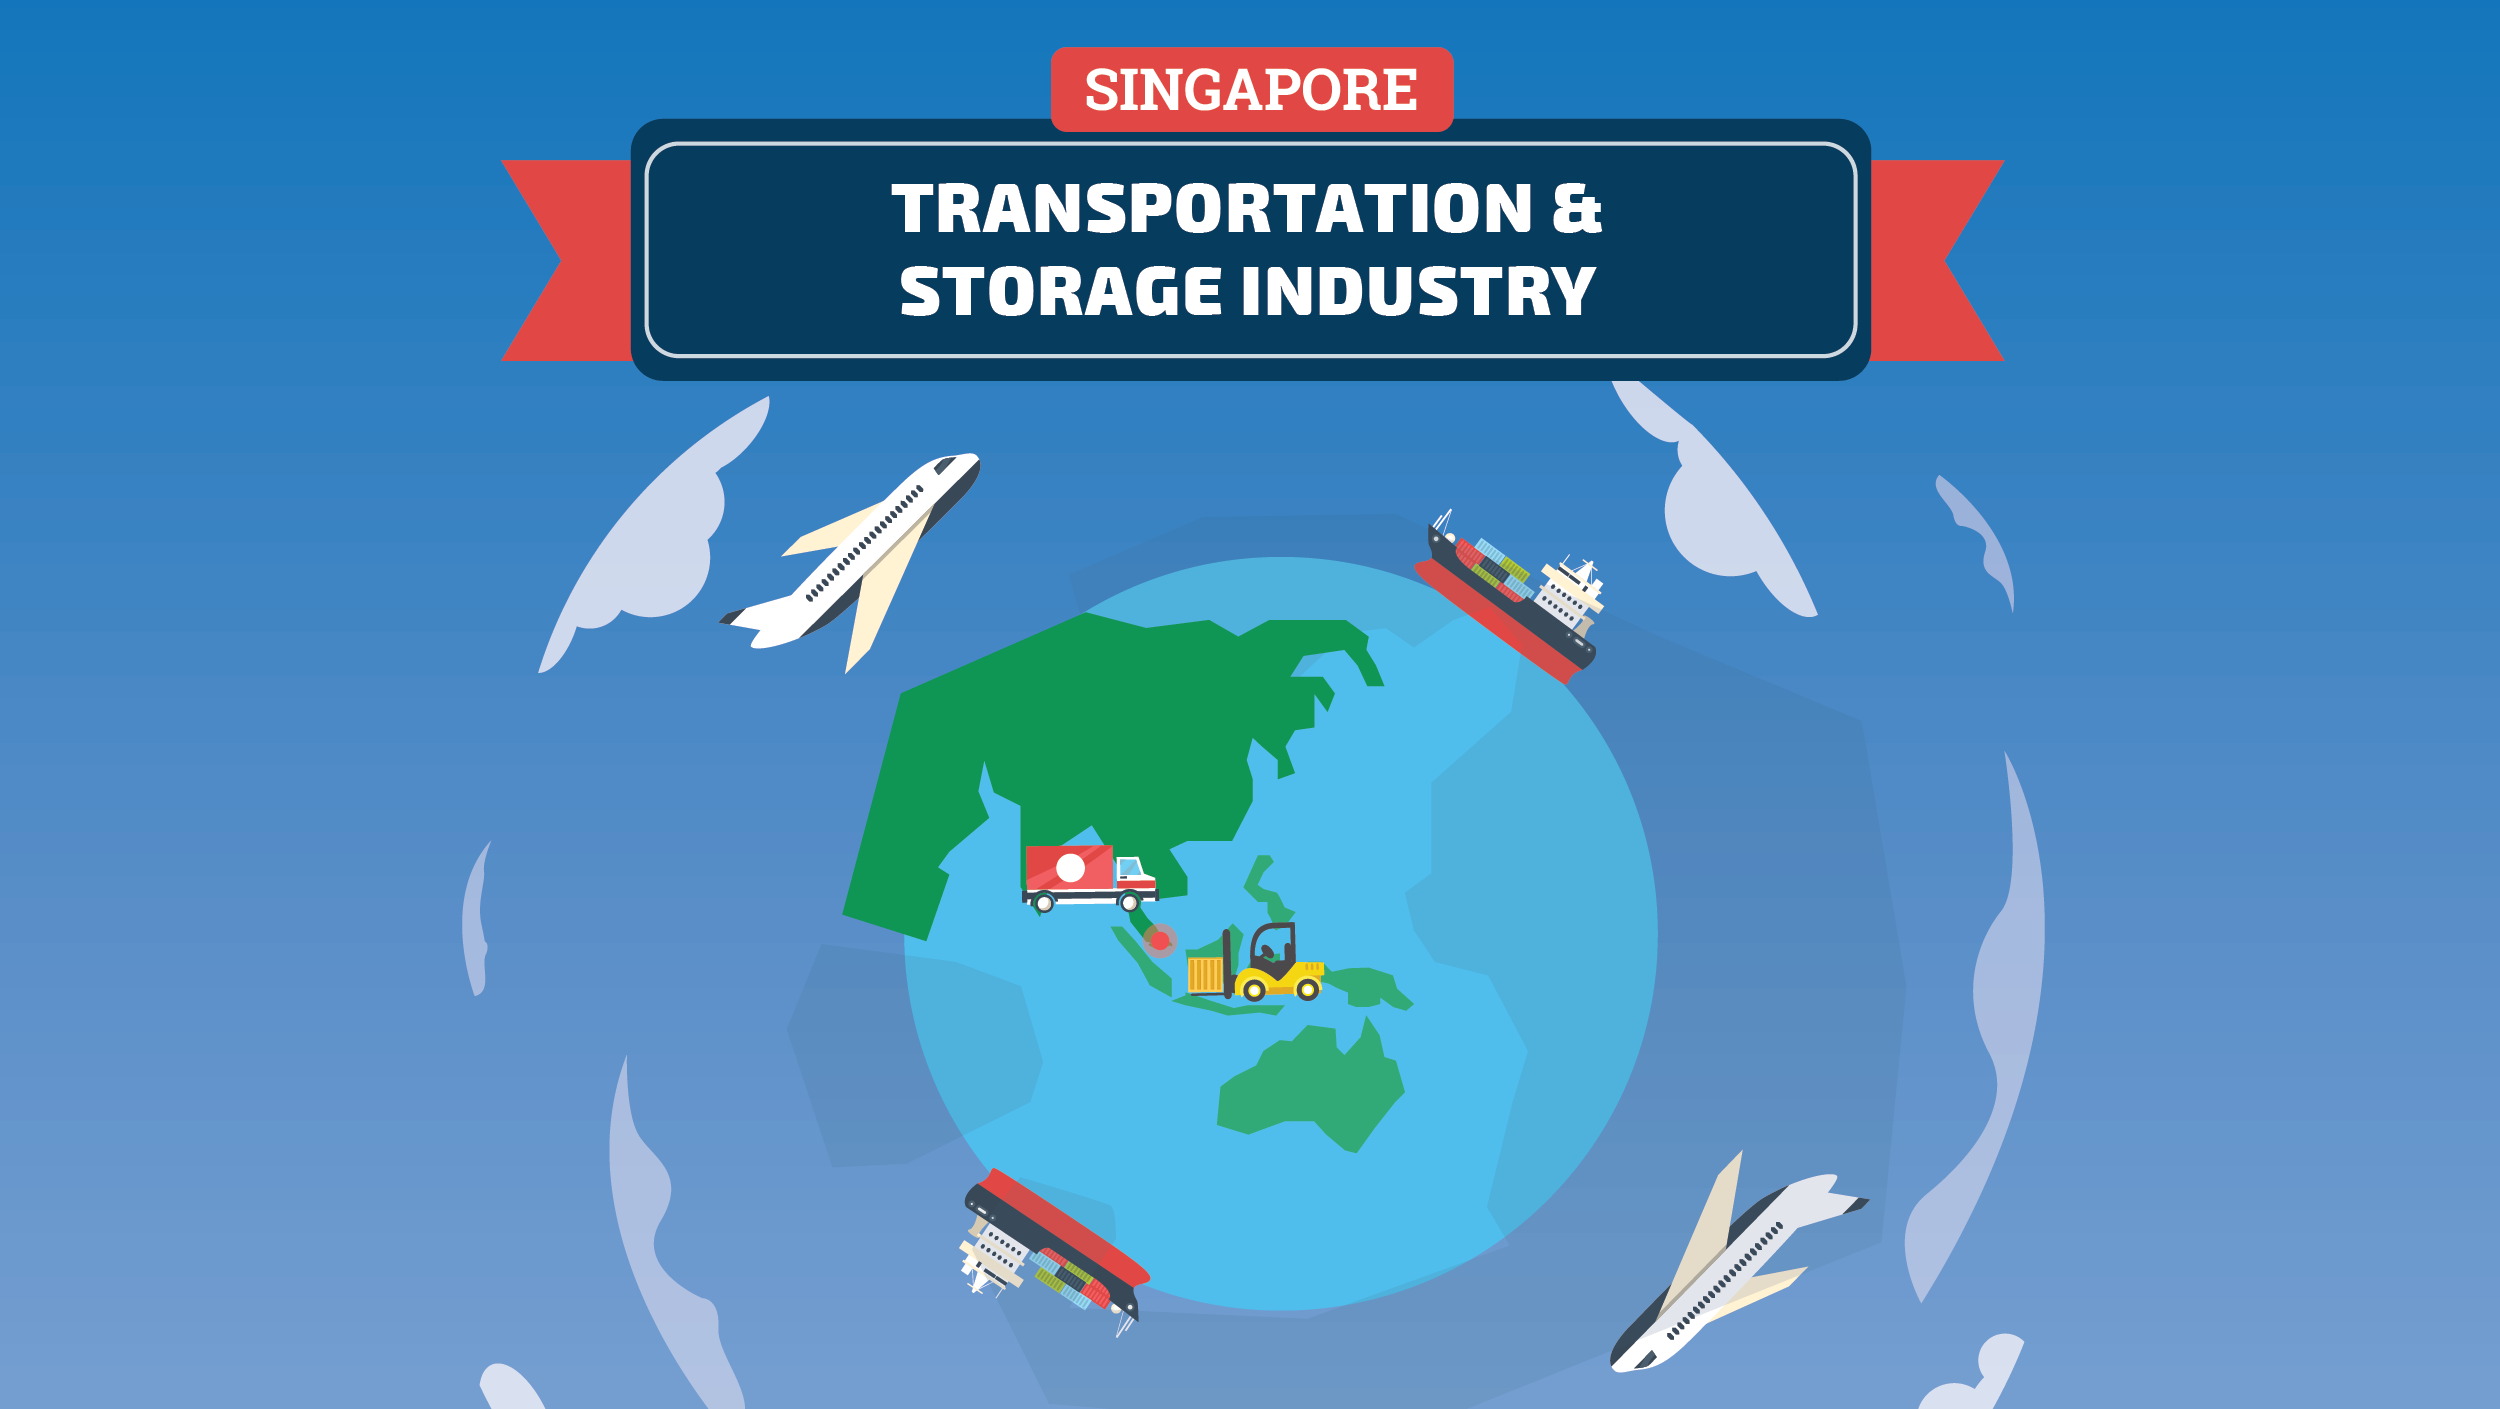 Singapore Transportation & Storage Industry 2021